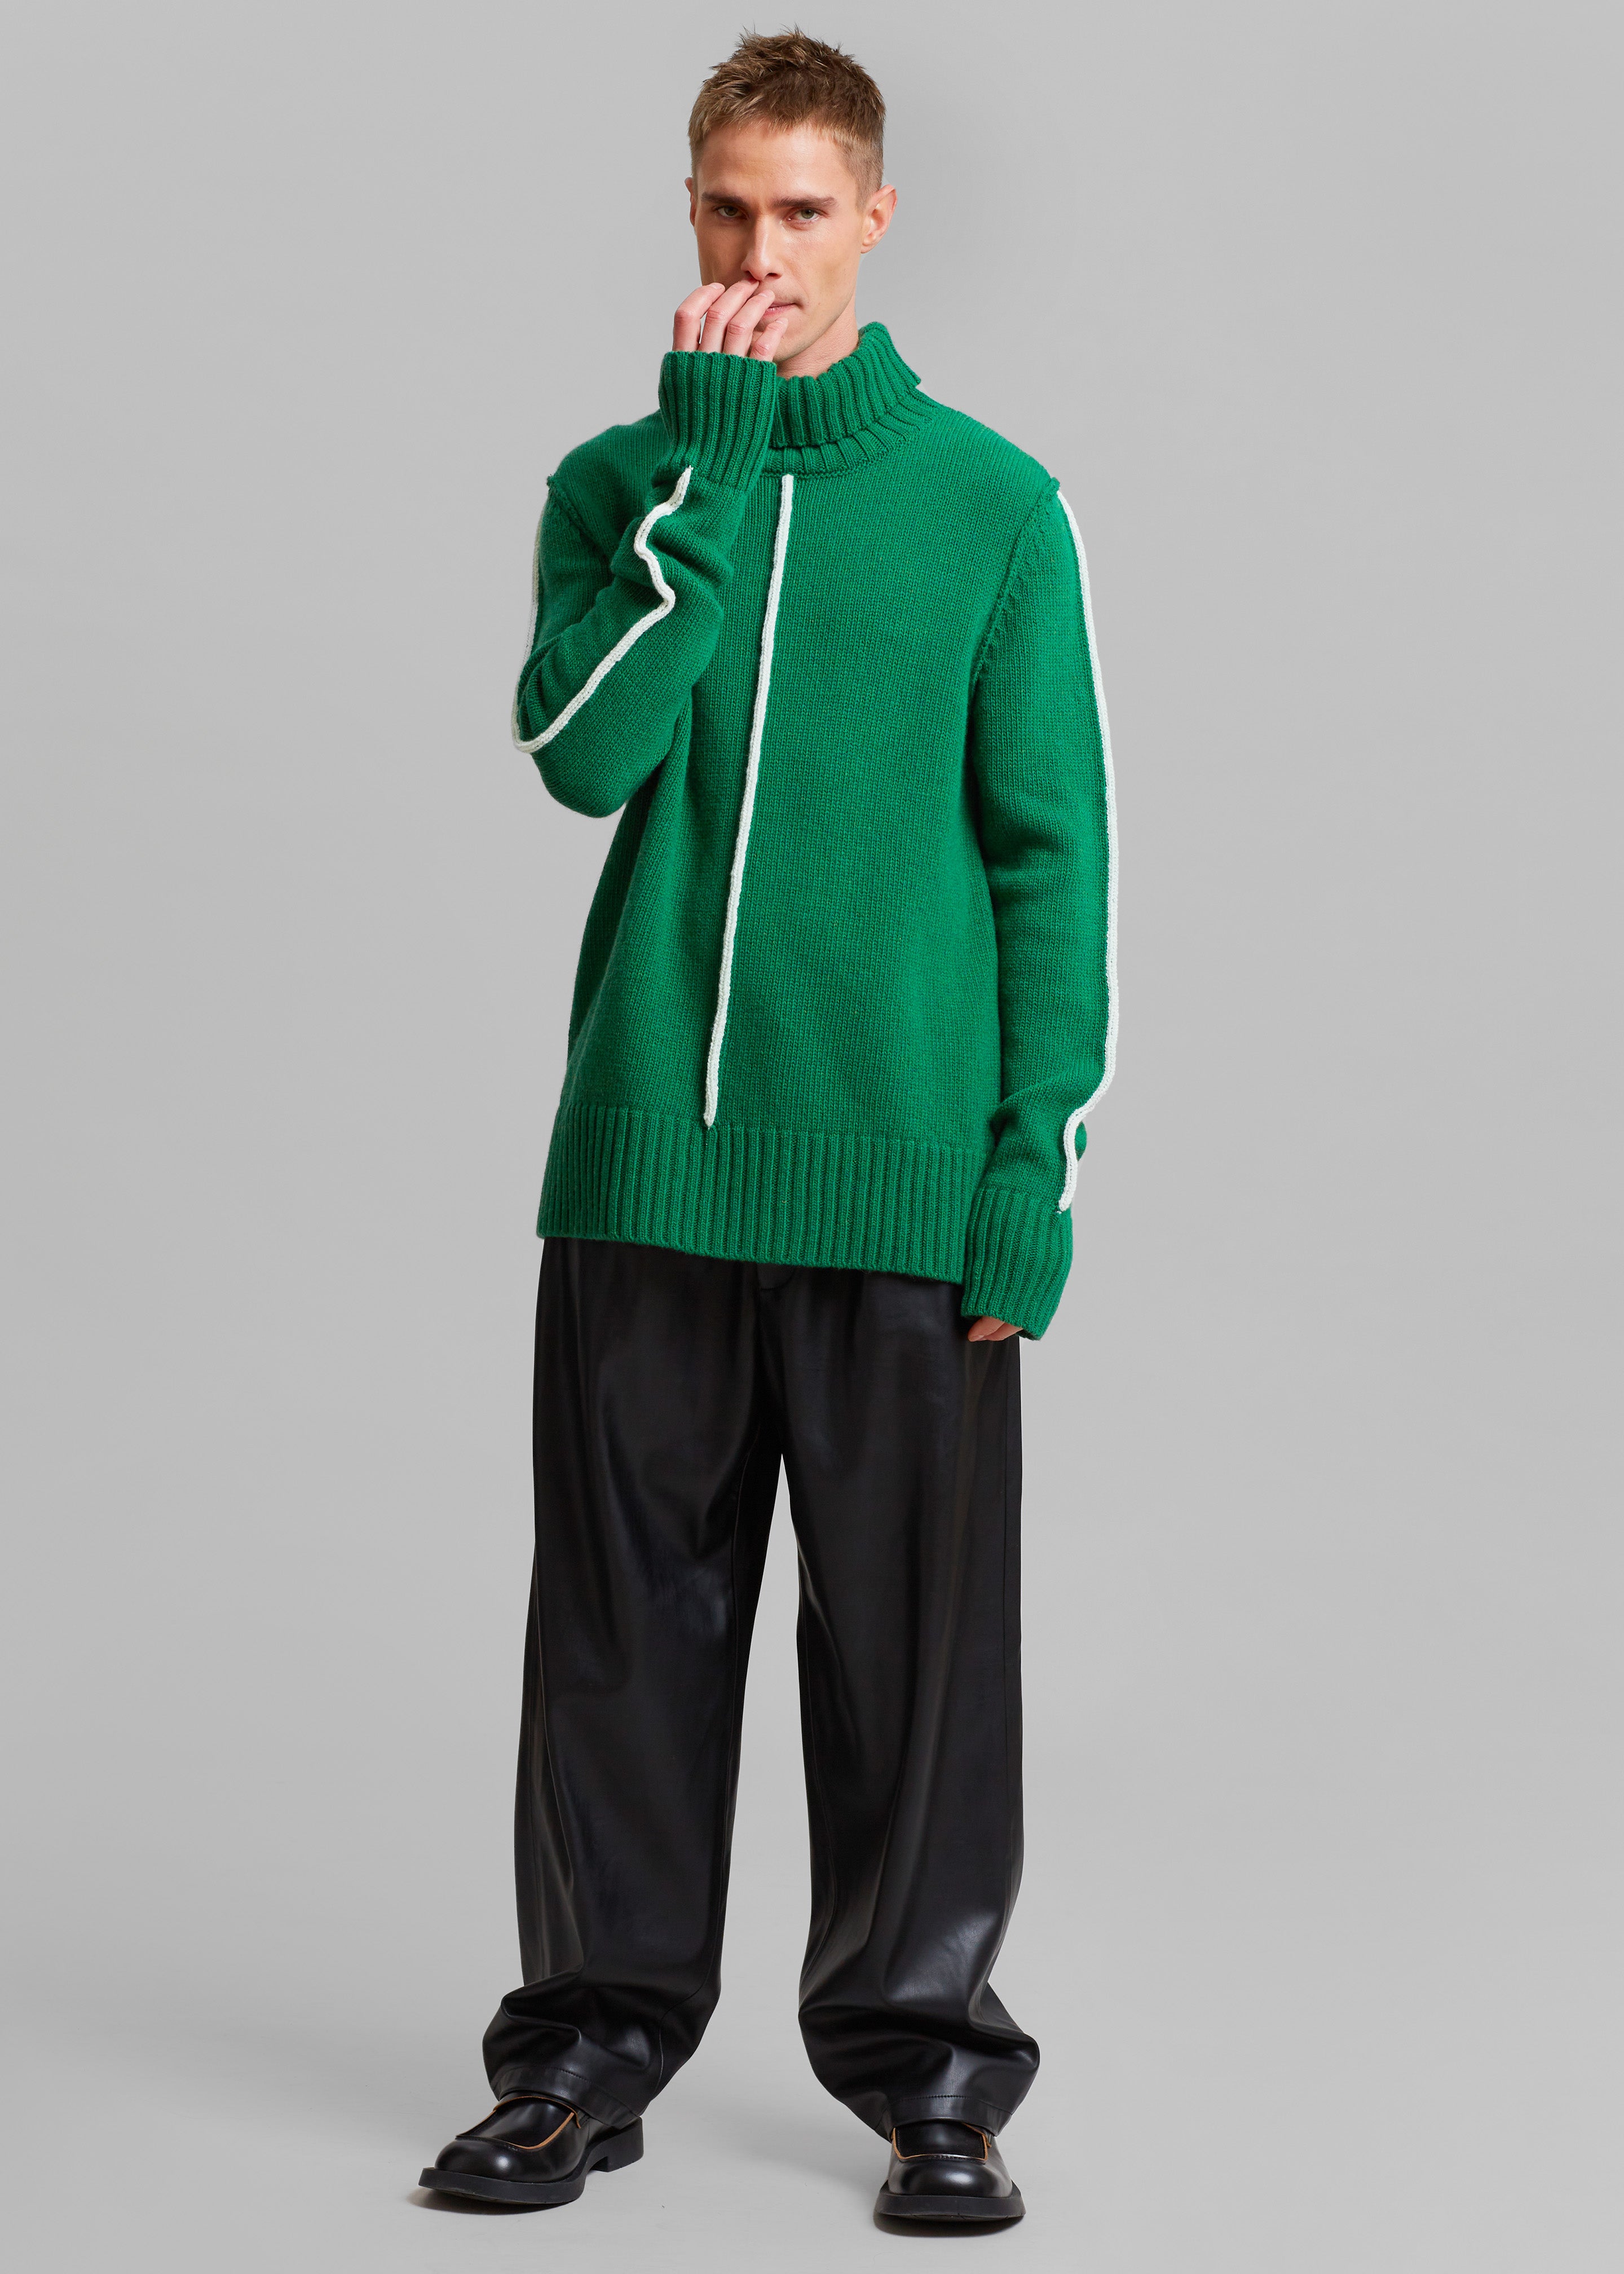 EGONLab Egonimati Turtleneck Sweater - Green Knit - 4